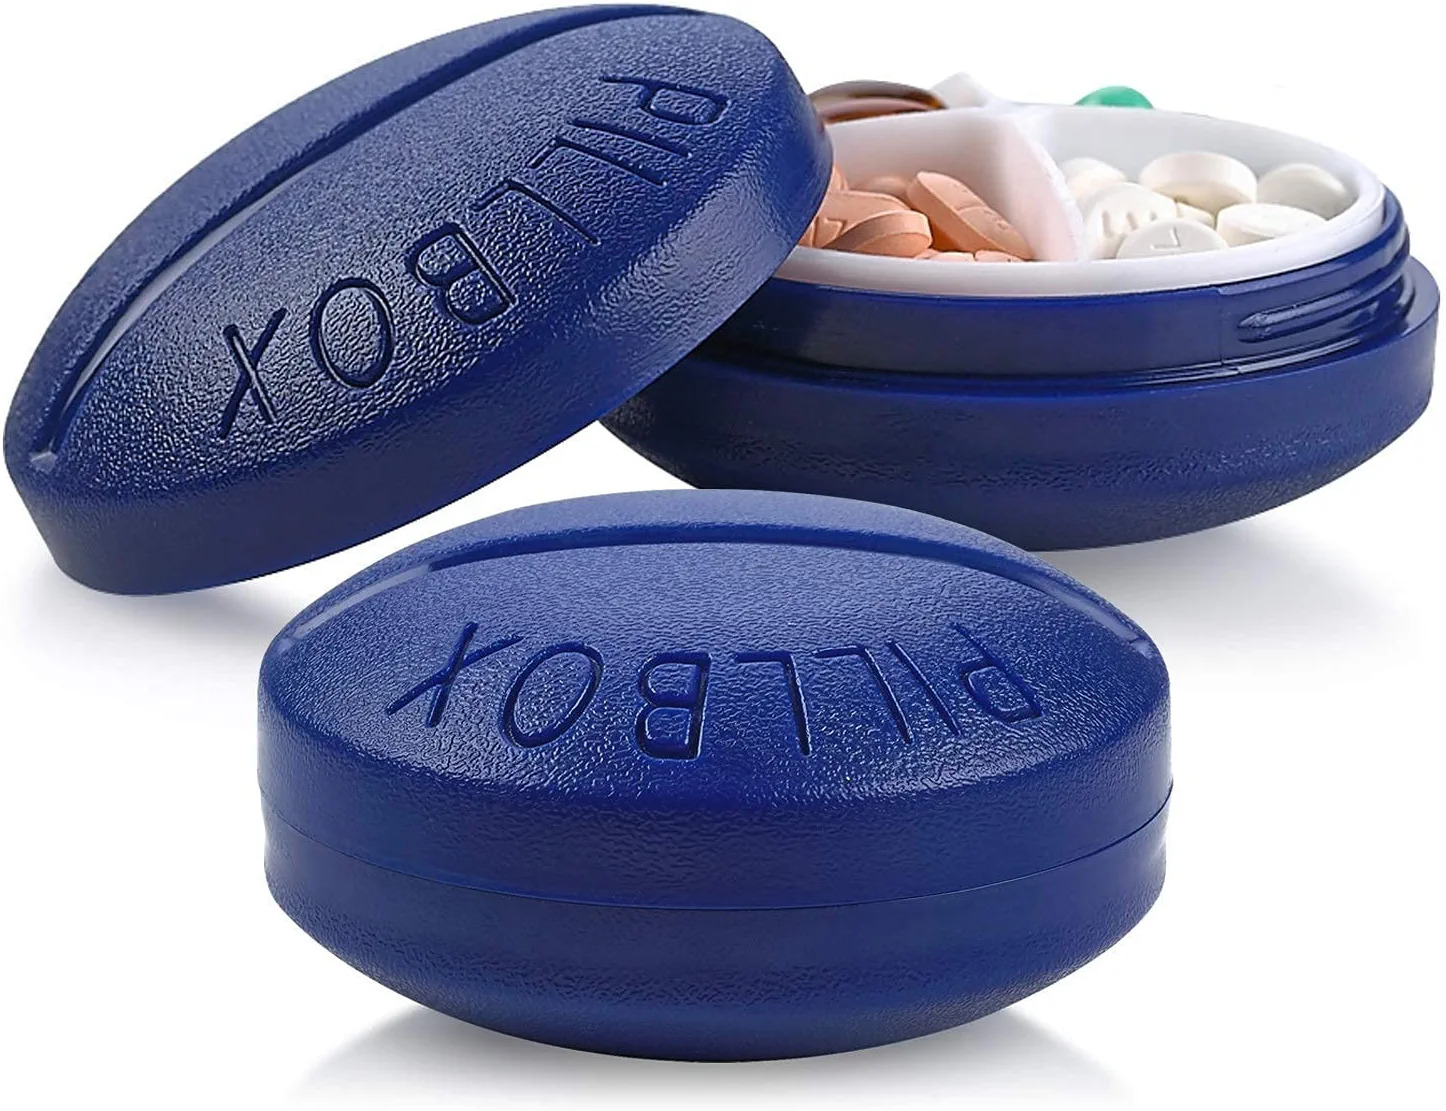 Razbag Traveler Small Medicine Bag and FREE Pillbox - Holds 5